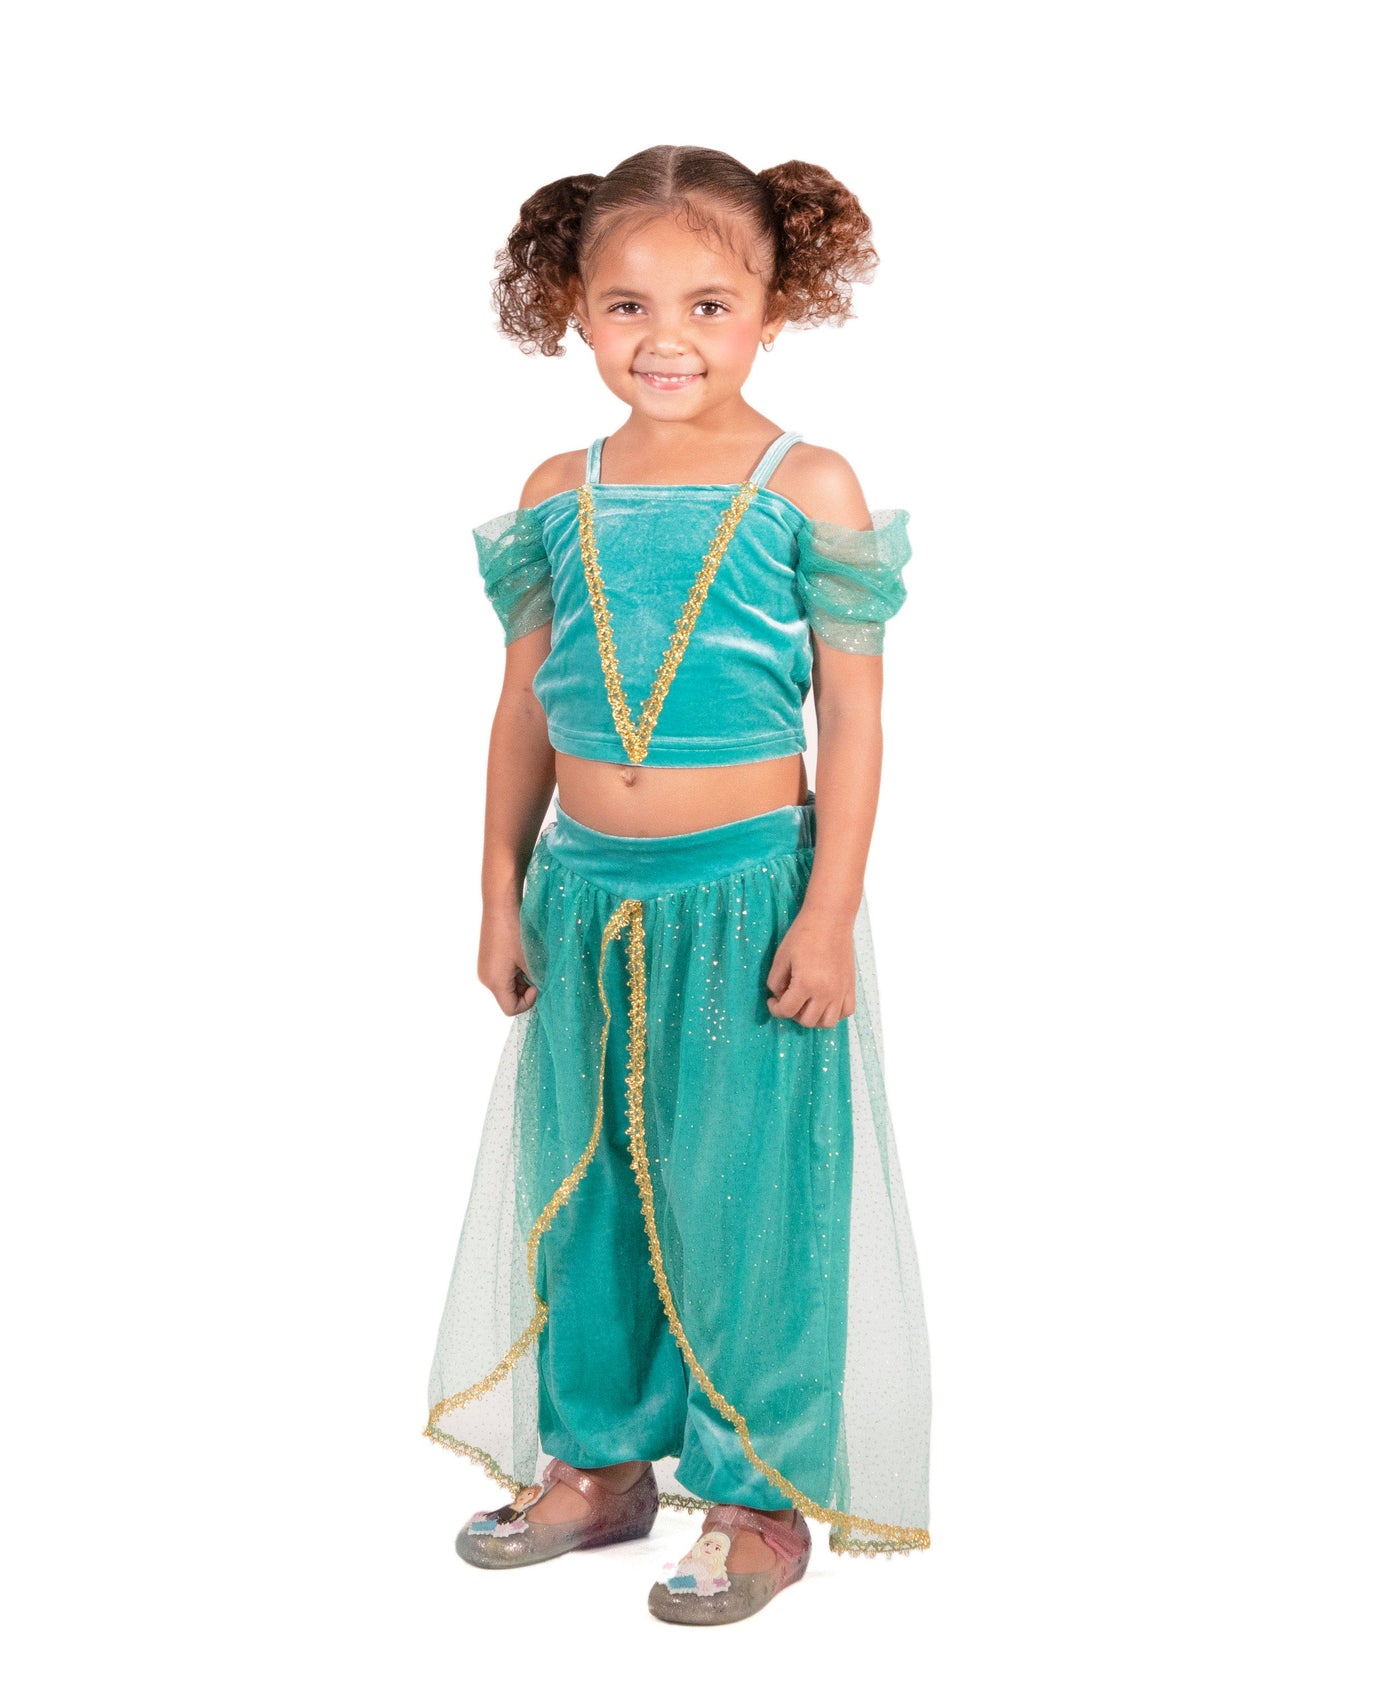 Joy Costumes: The Arabian Princess Costume SHIPS SEPARATELY